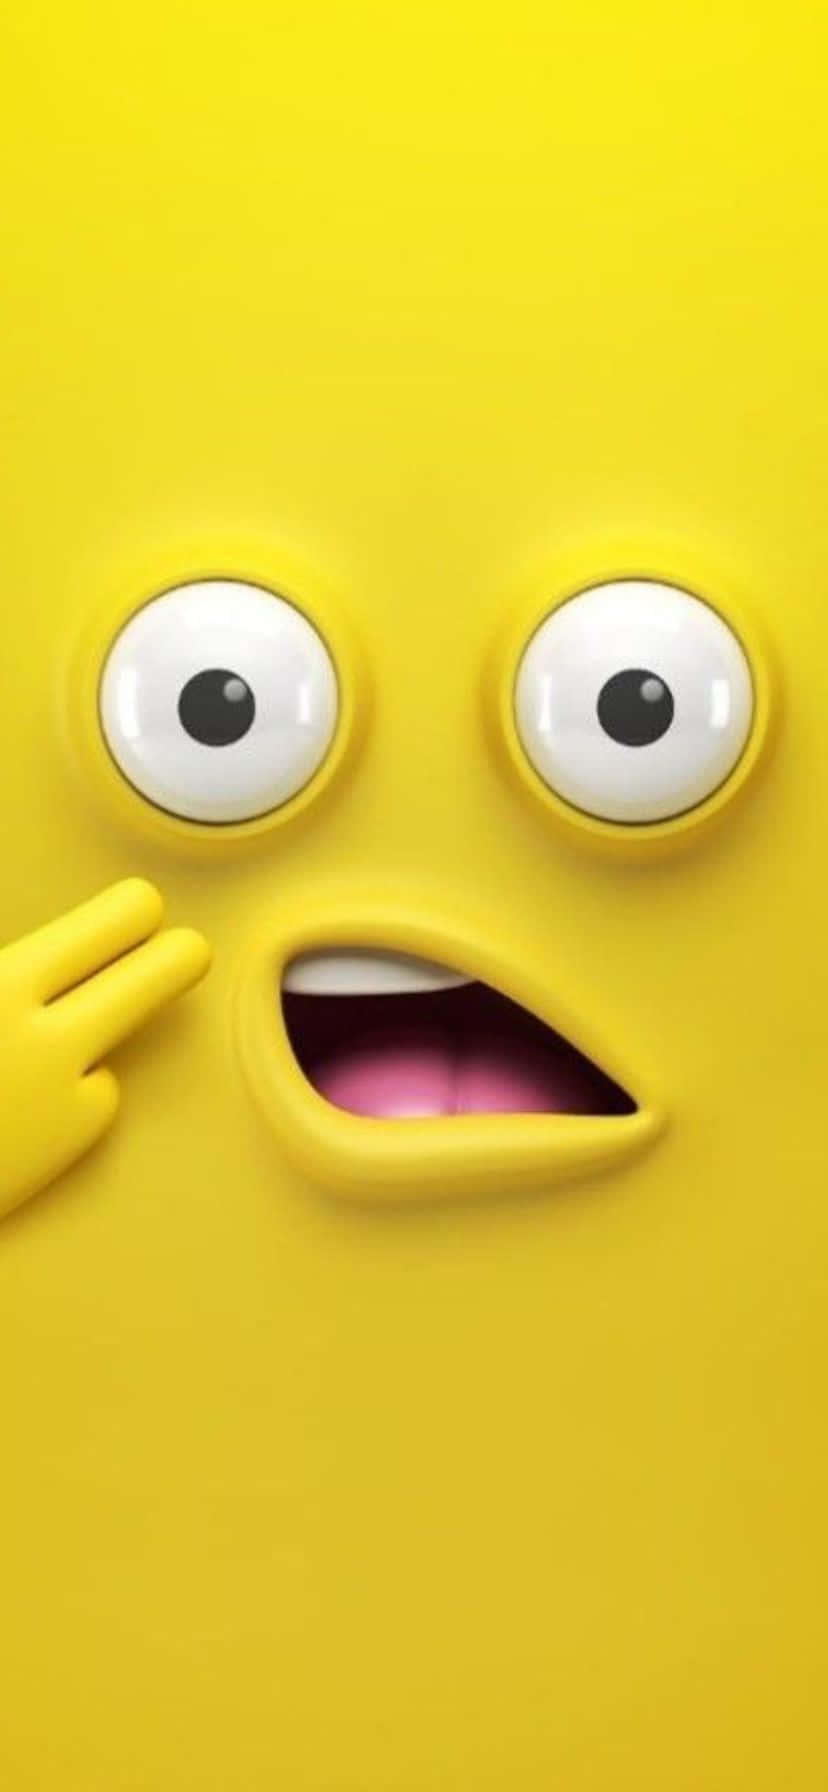 Surprised Yellow Face Emoji.jpg Wallpaper